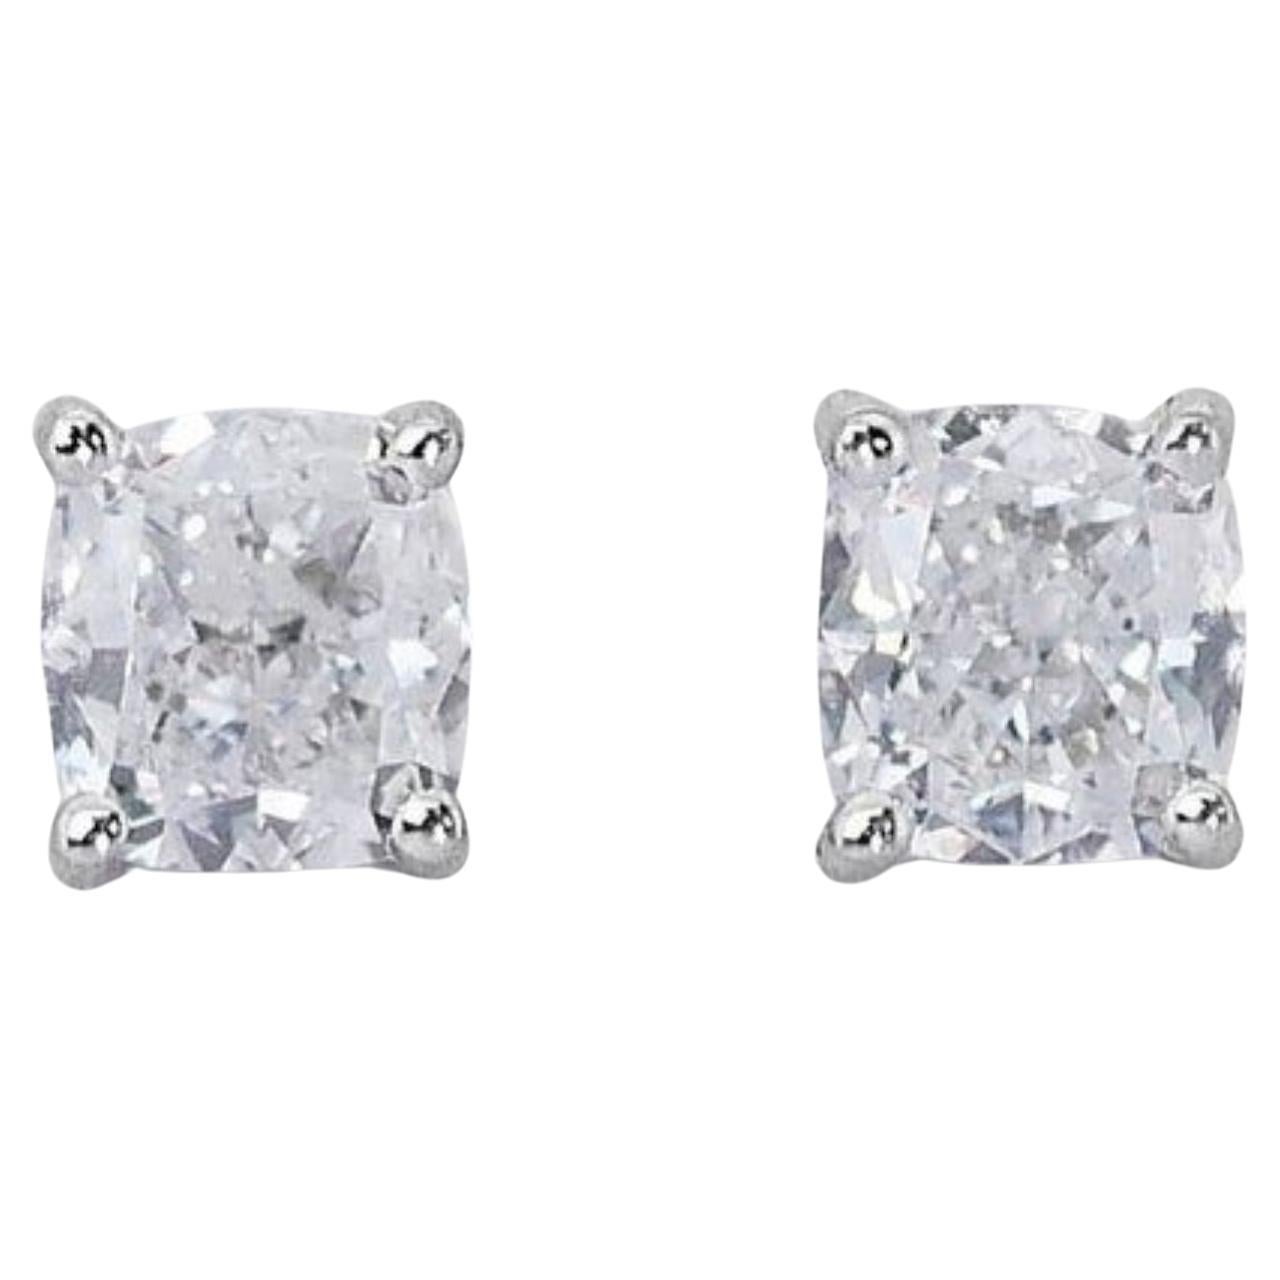 Stunning 1.40ct Cushion Modified Diamond Earrings set in 18K White Gold